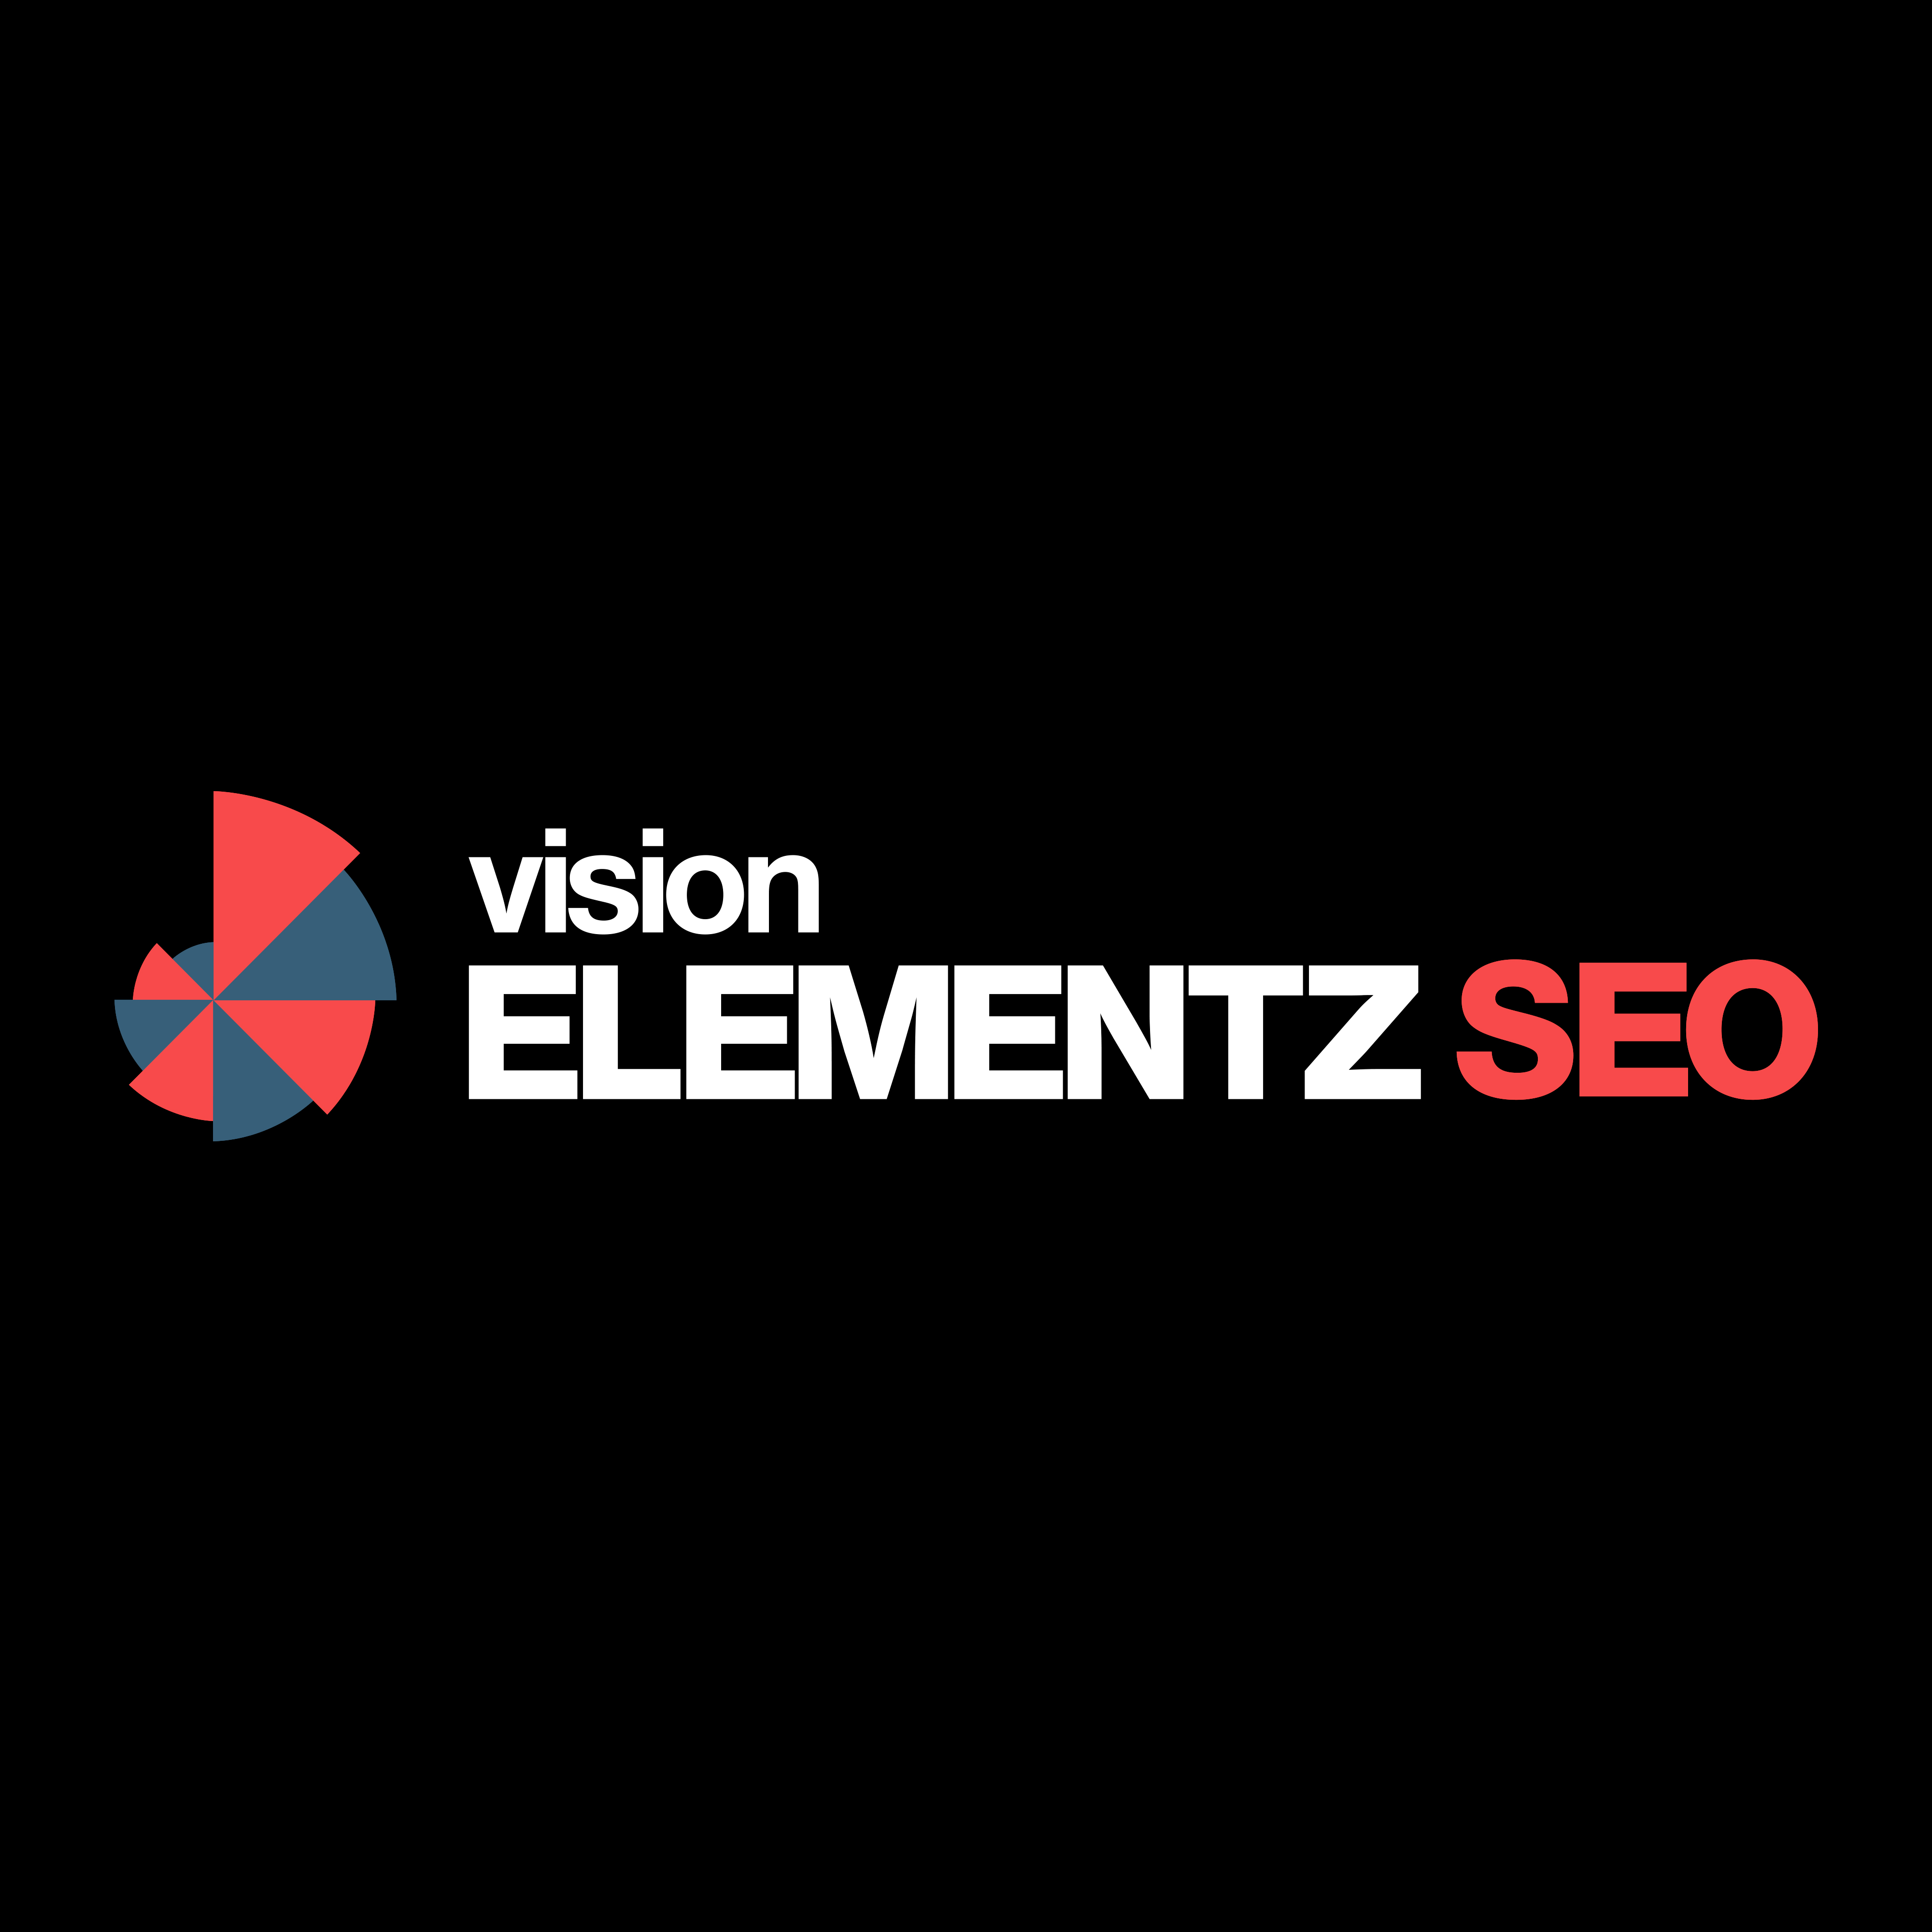 Vision Elementz SEO